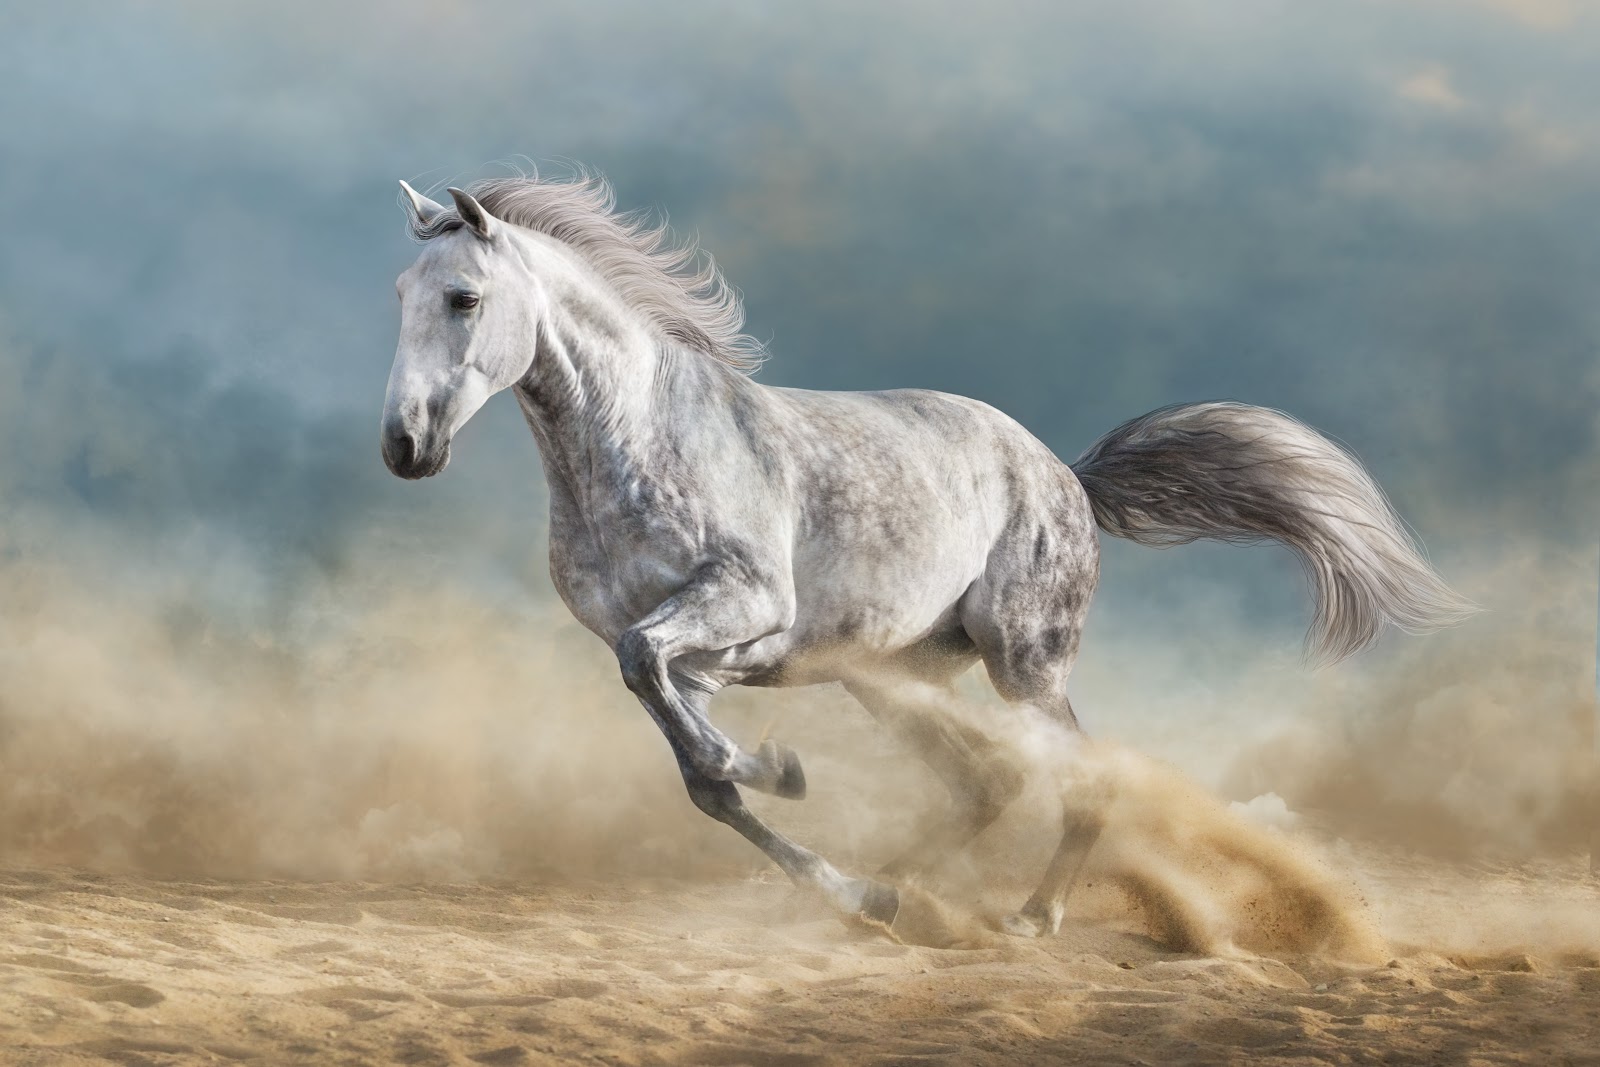 A grey horse running on sandy soil